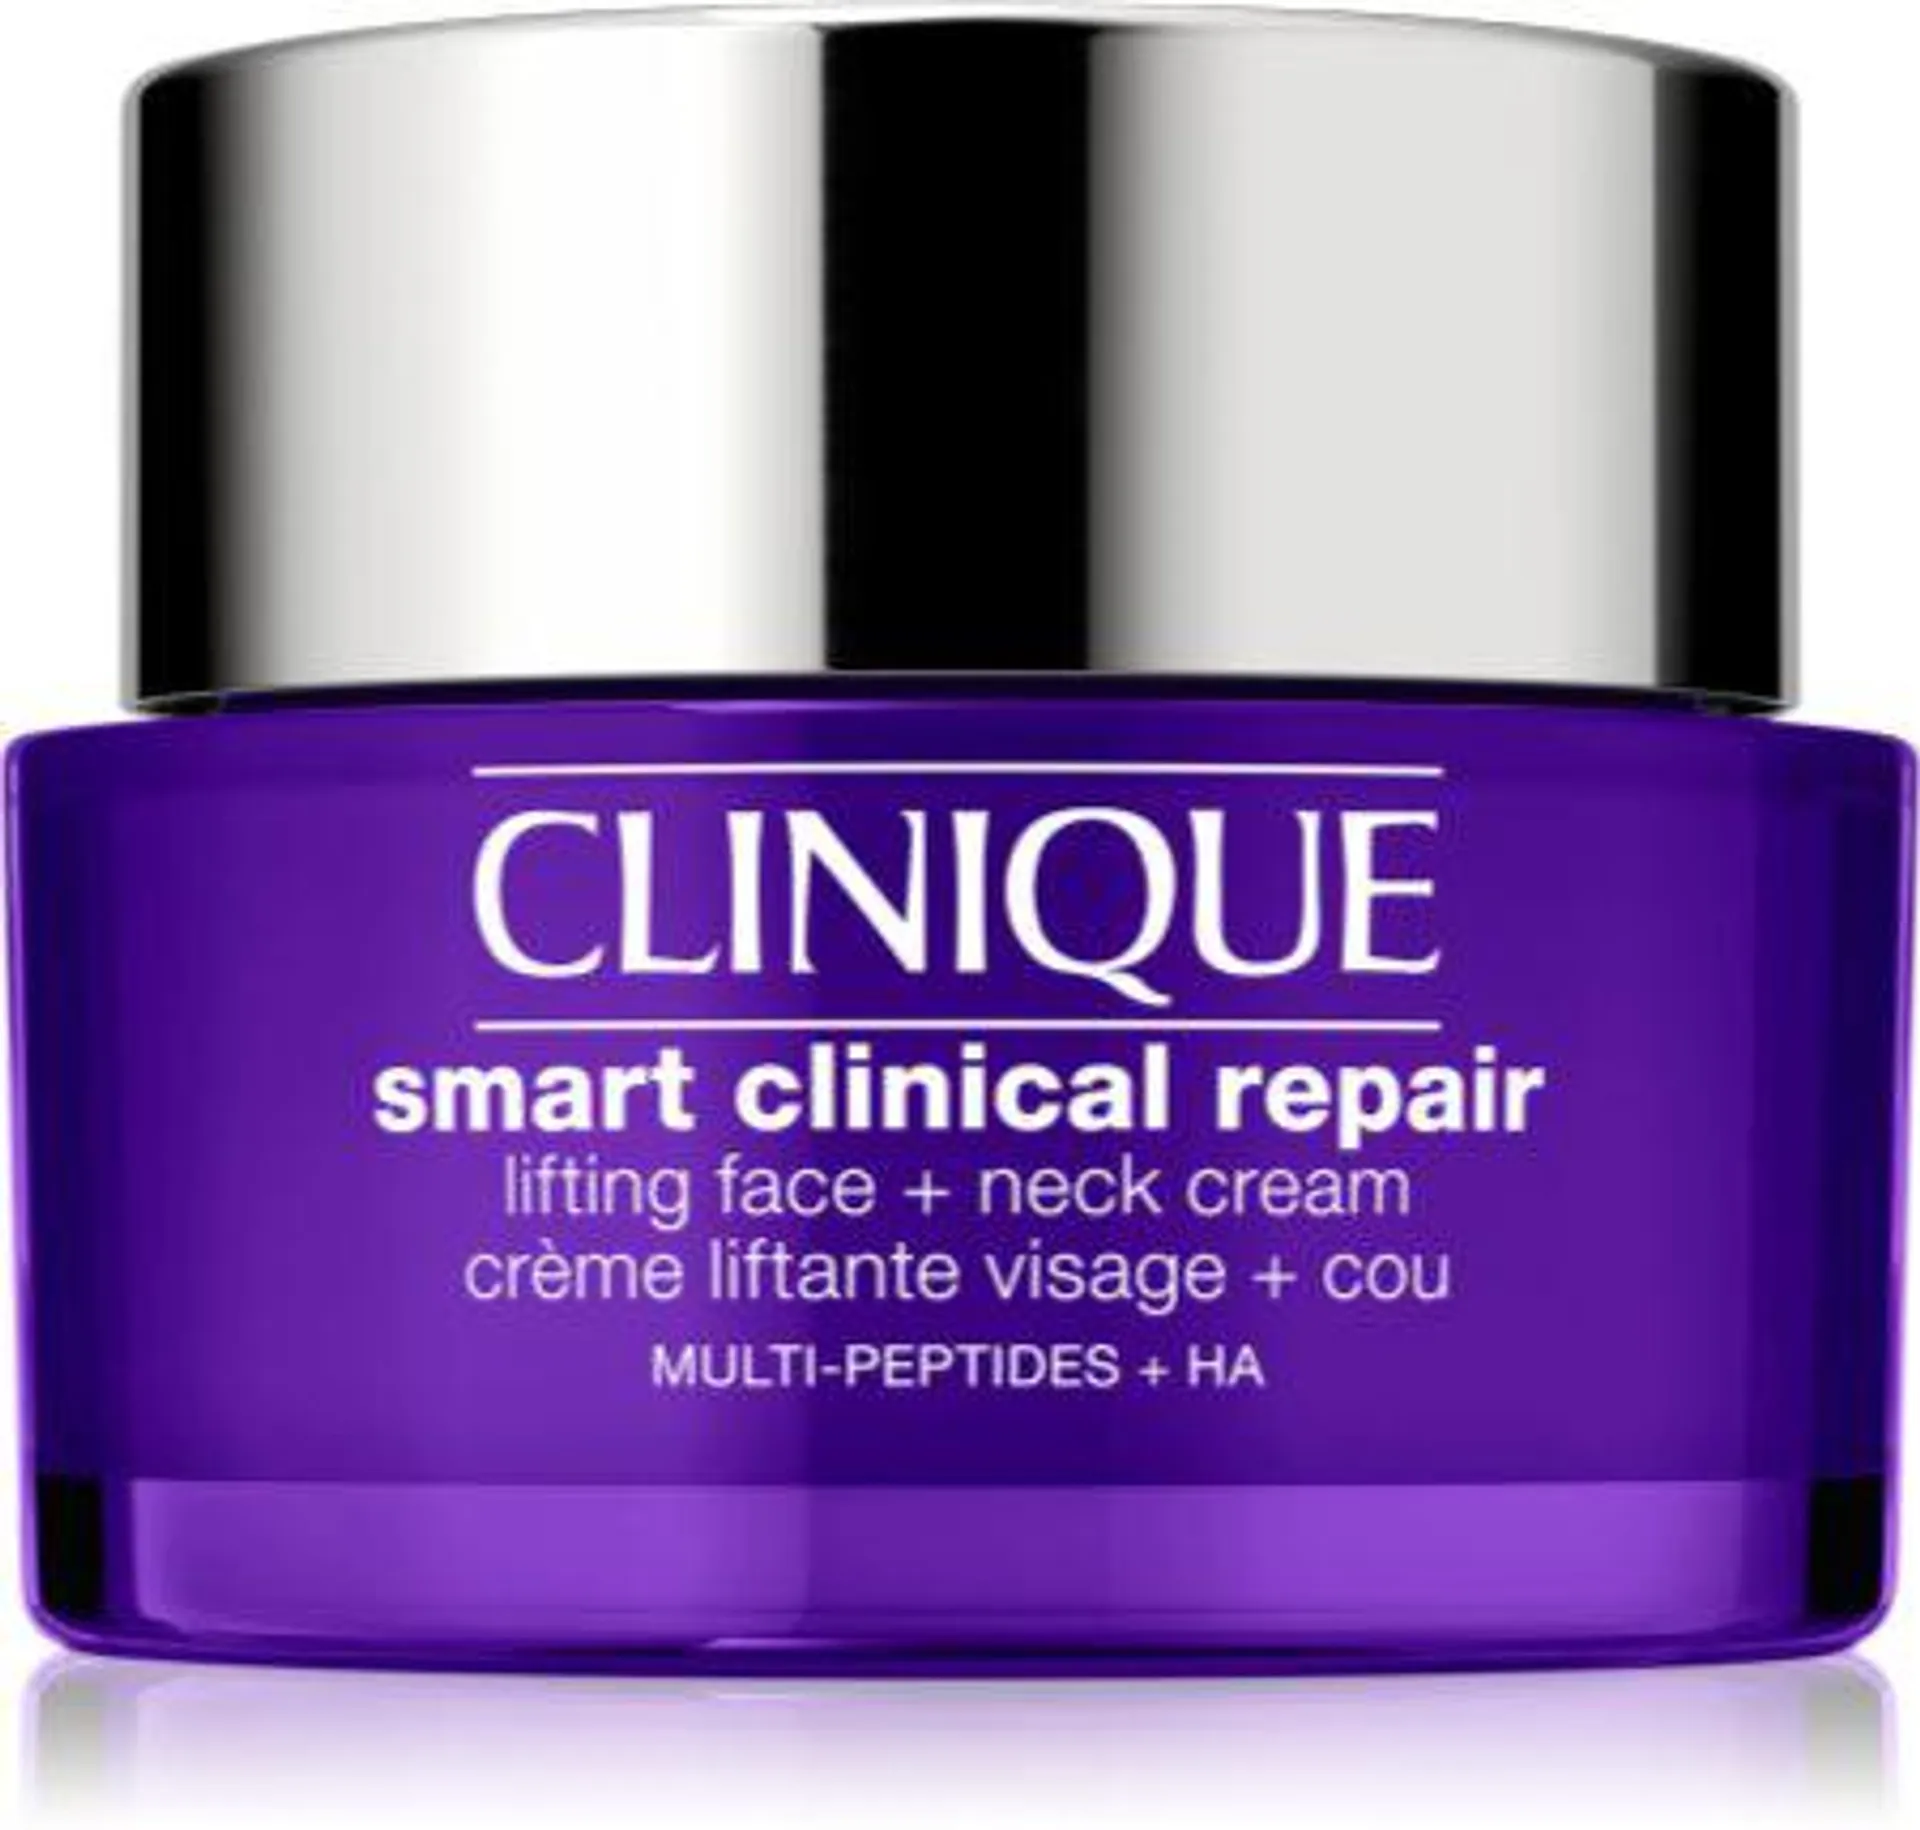 Smart Clinical™ Repair Lifting Face + Neck Cream